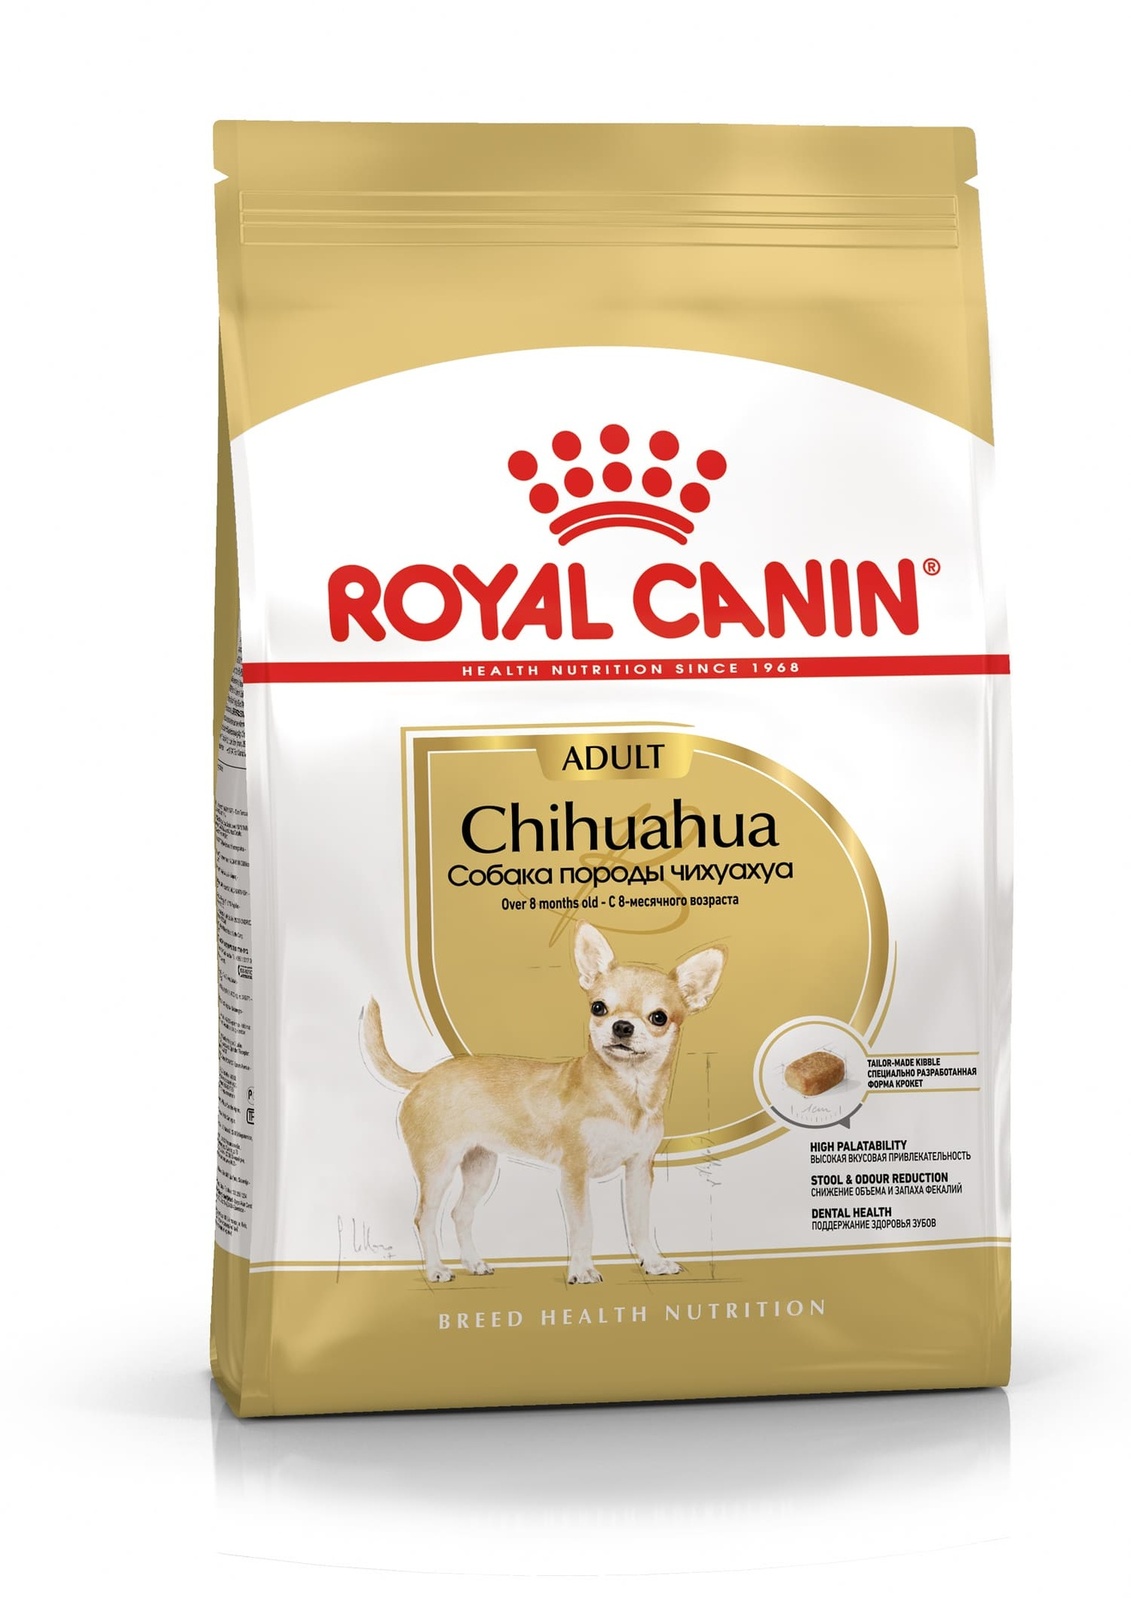 Royal Canin Royal Canin сухой корм для чихуахуа с 8 месяцев (500 г) цена и фото